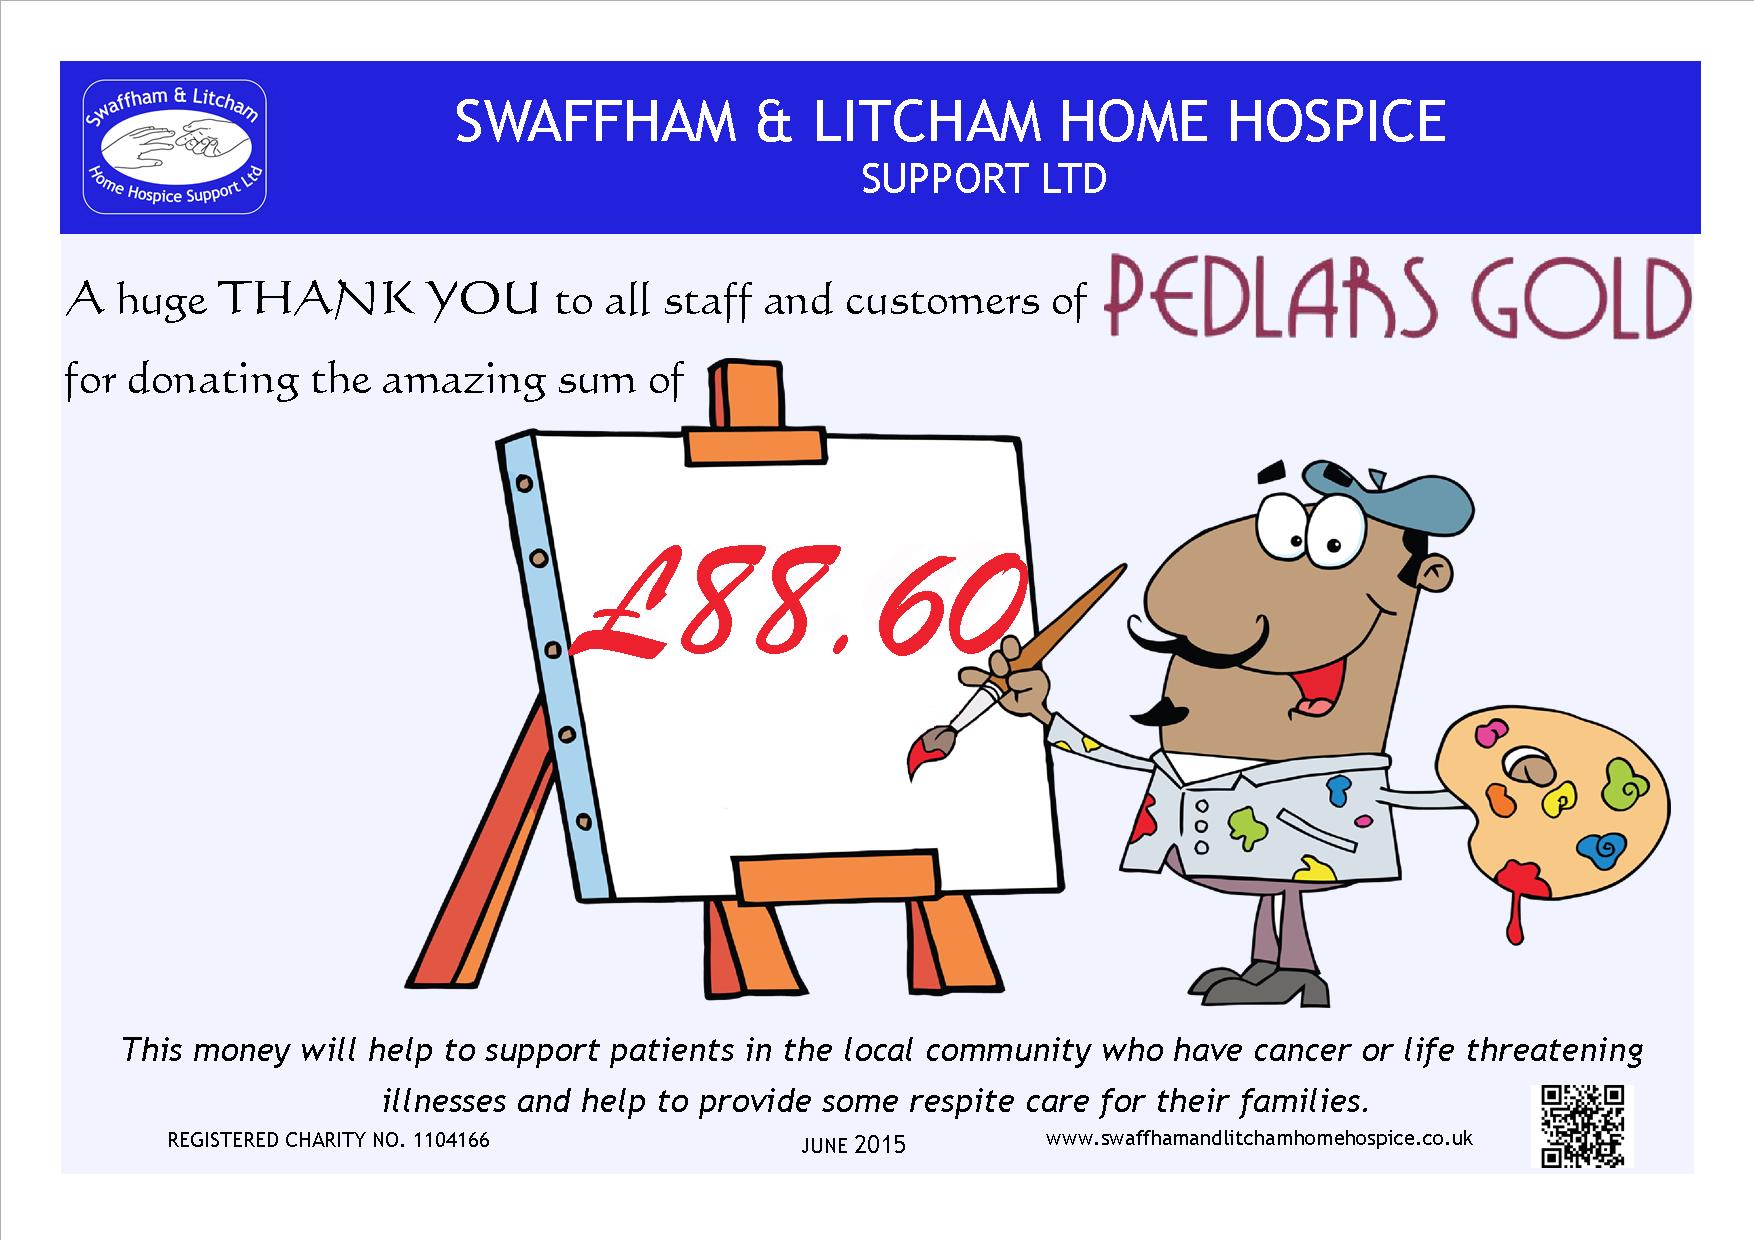 Donations by Staff & Customers of Pedlars Gold Swaffham